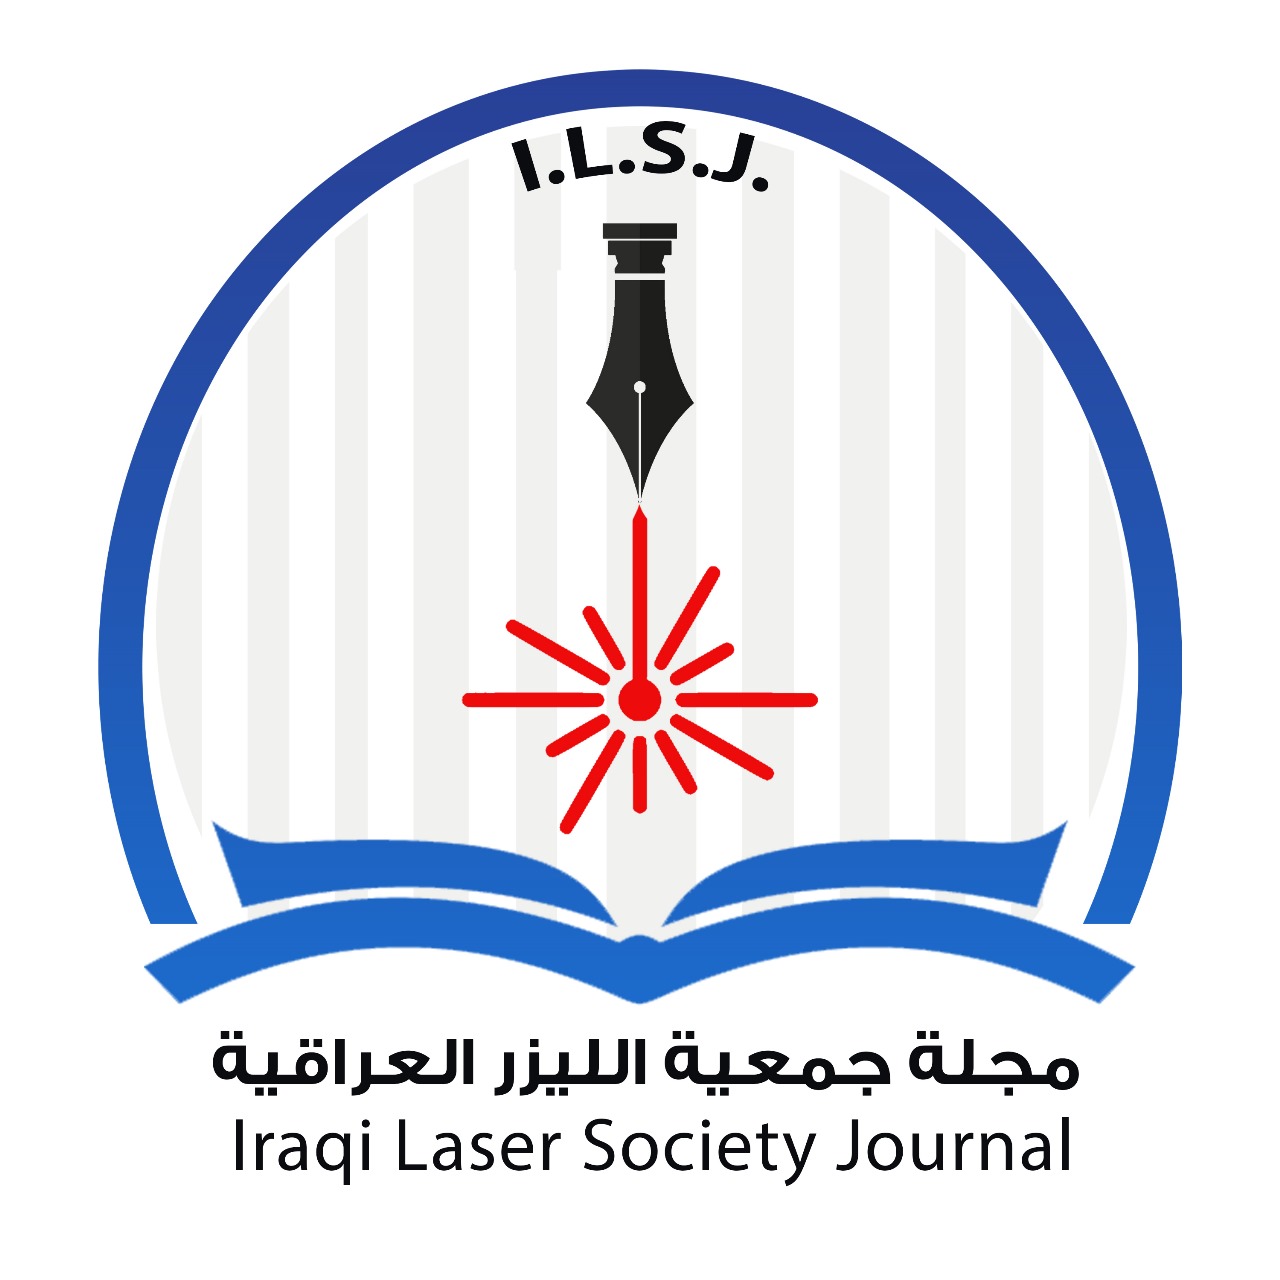 Iraqi Laser Society Journal